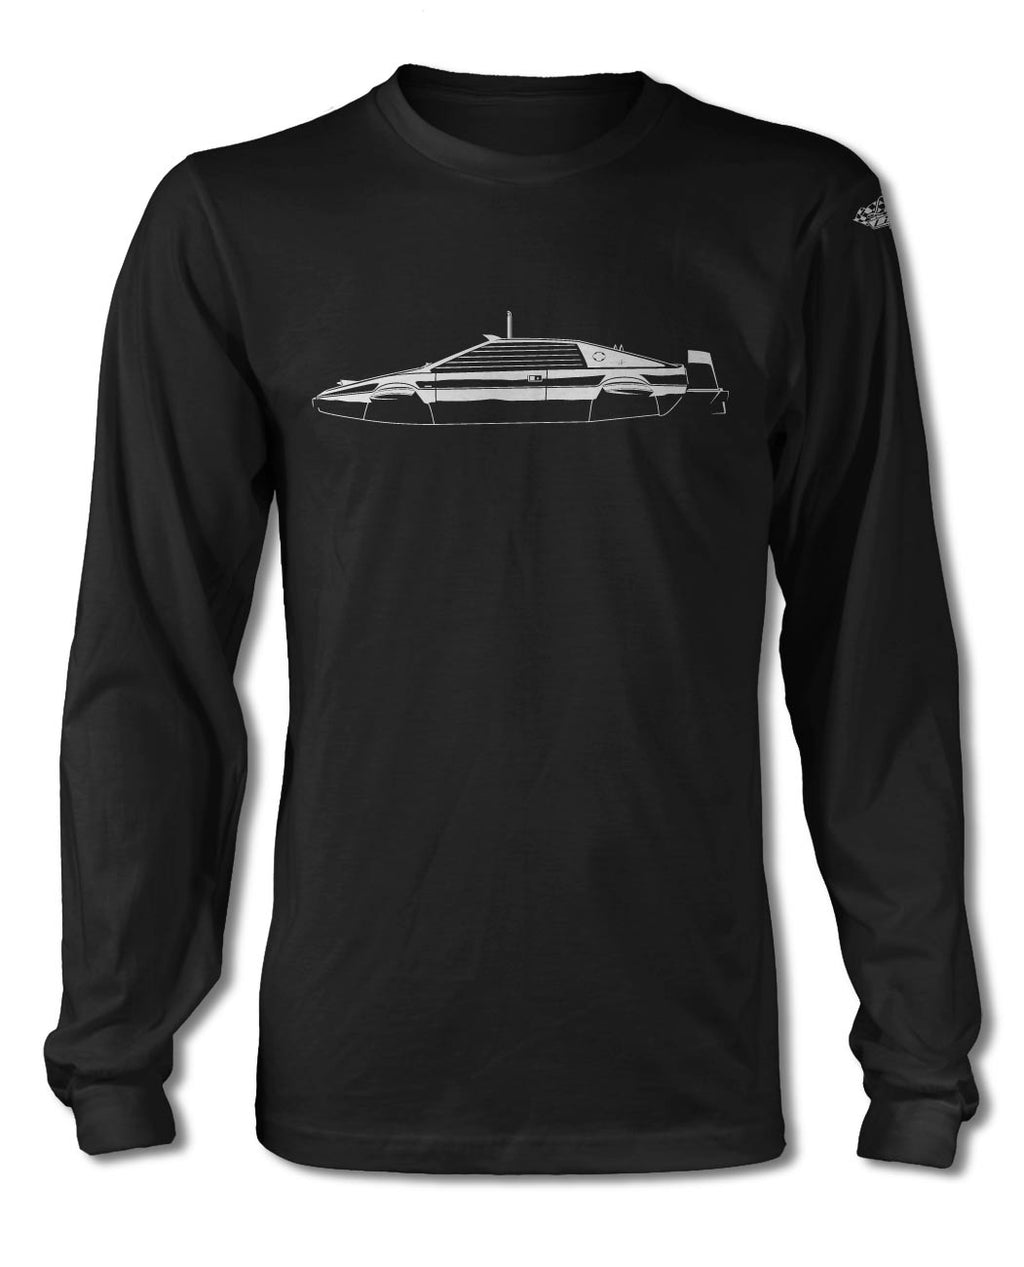 Lotus Esprit James Bond 007 Submarine T-Shirt - Long Sleeves - Side View